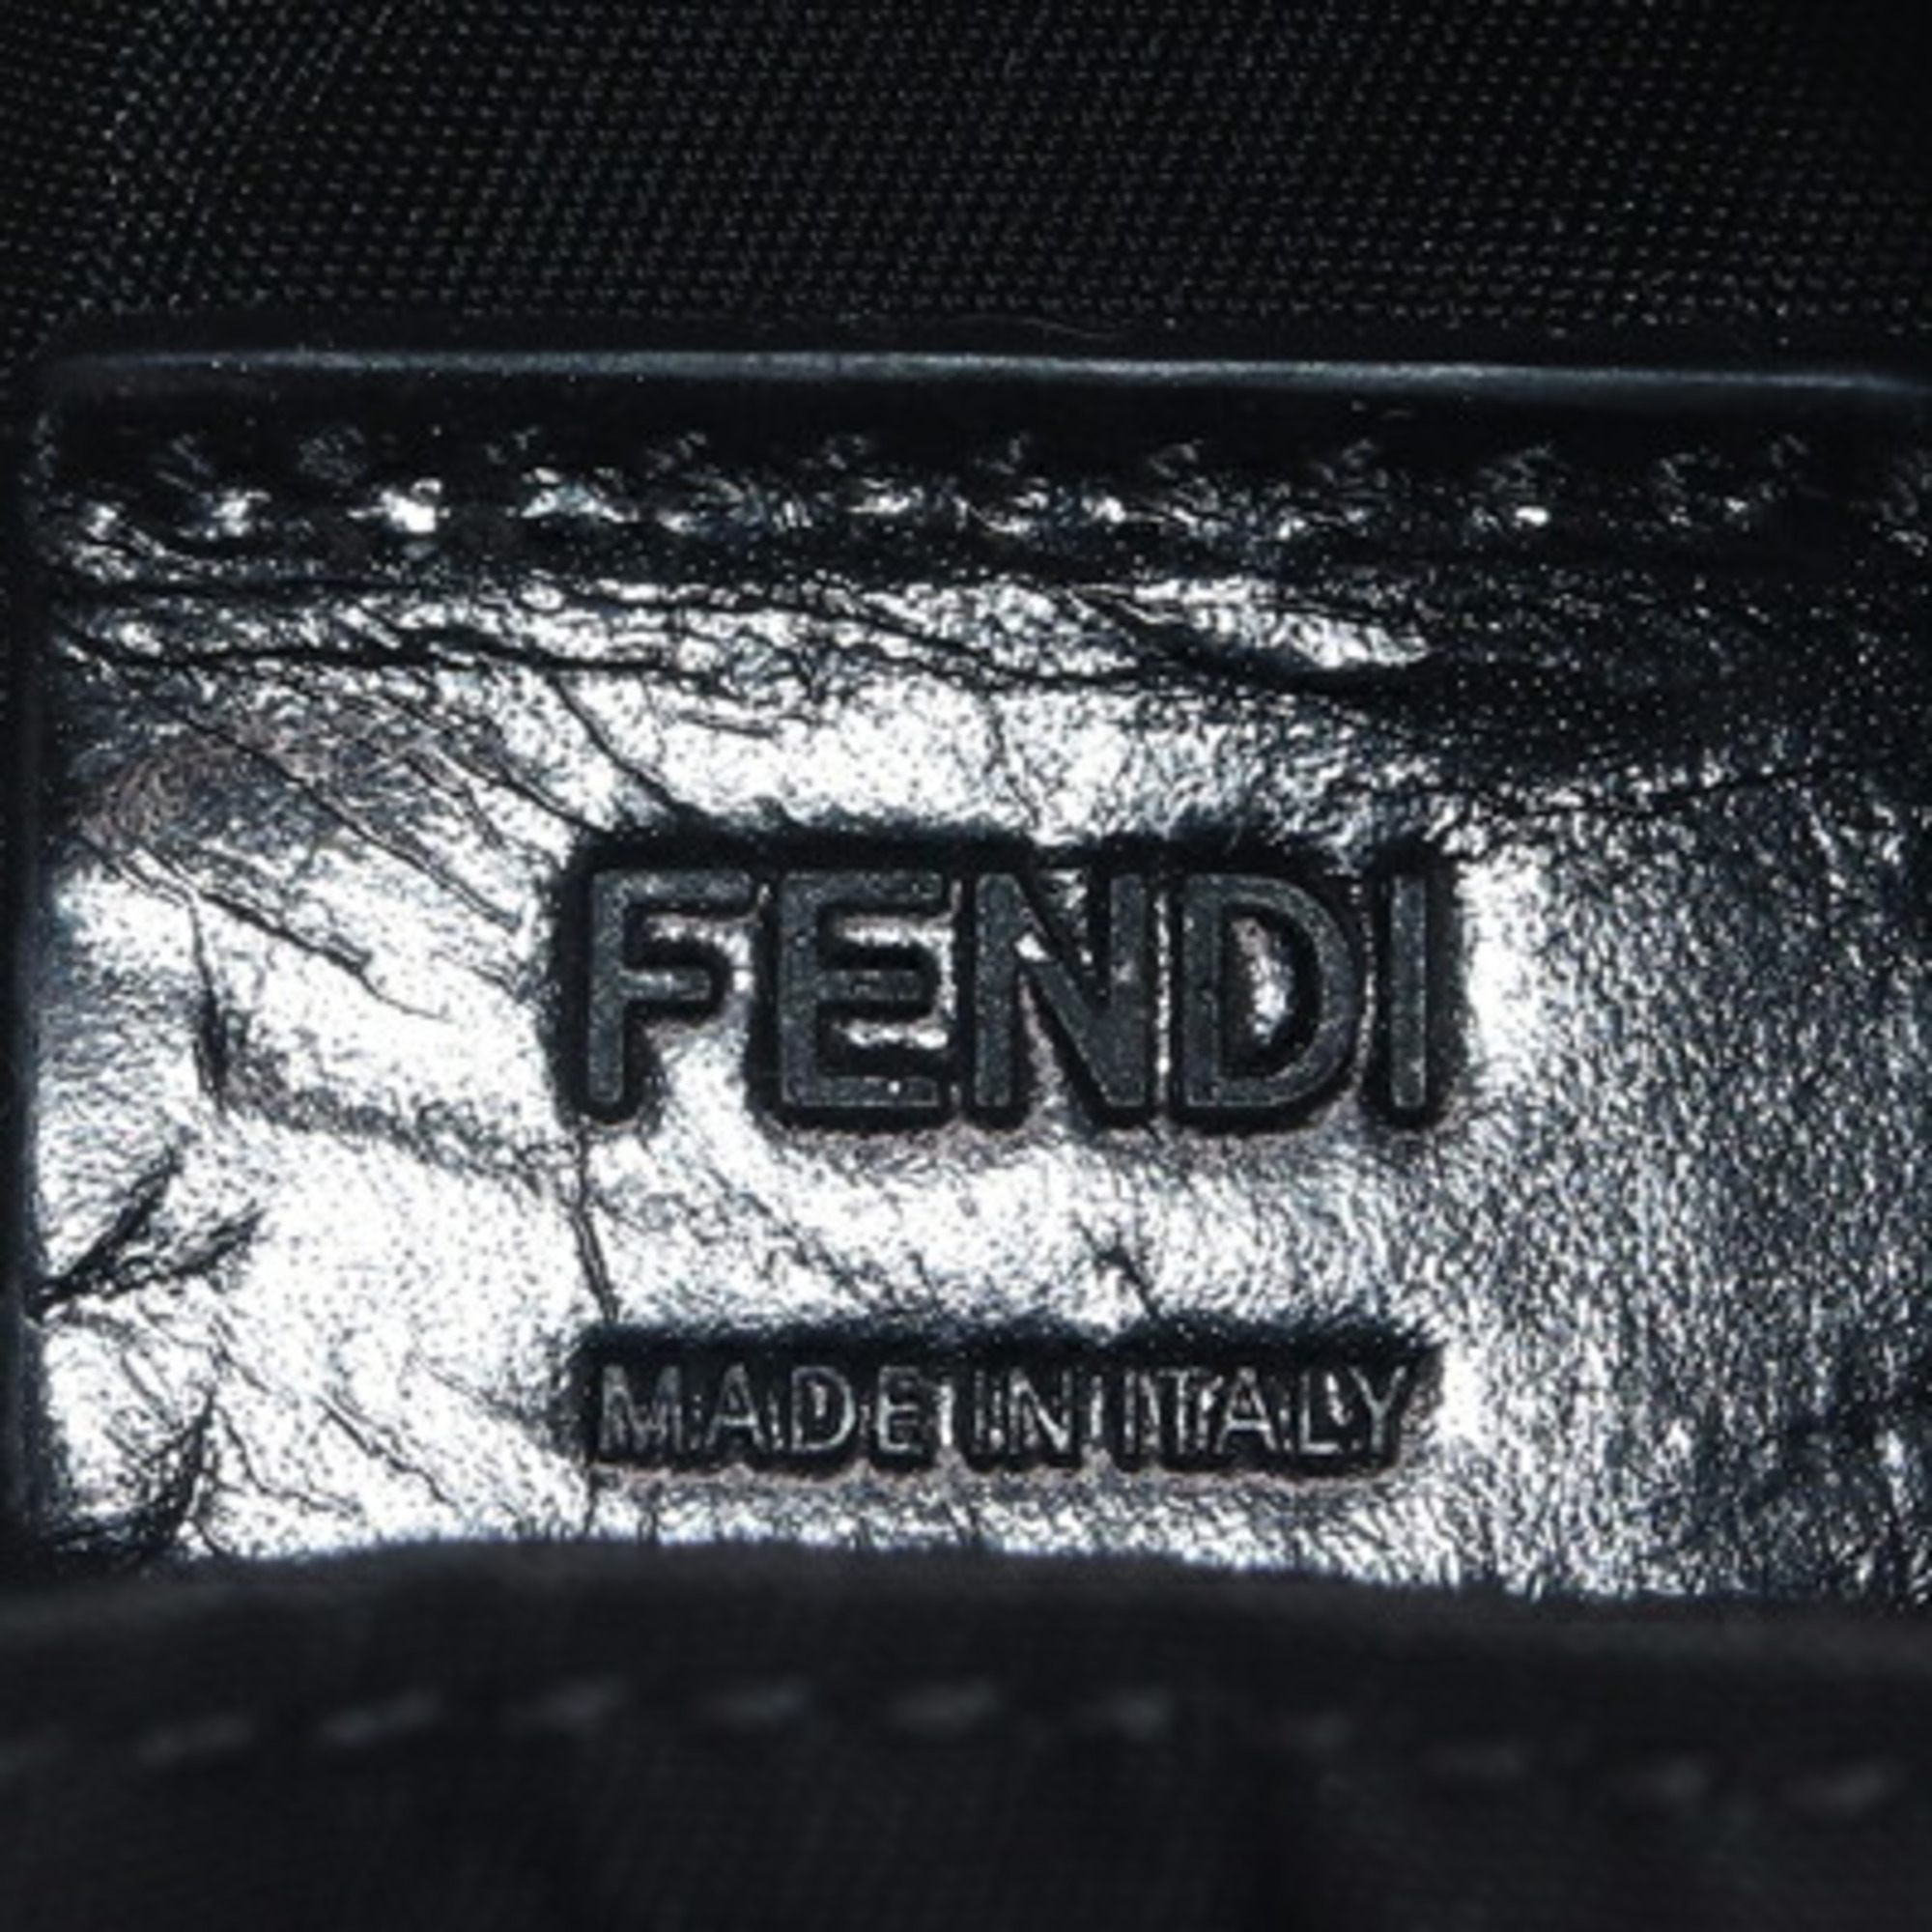 Fendi Bag Charm Bugs Monster Backpack Motif 7AR457 Pink Multicolor Nylon Leather Keychain Accessory Women Men FENDI